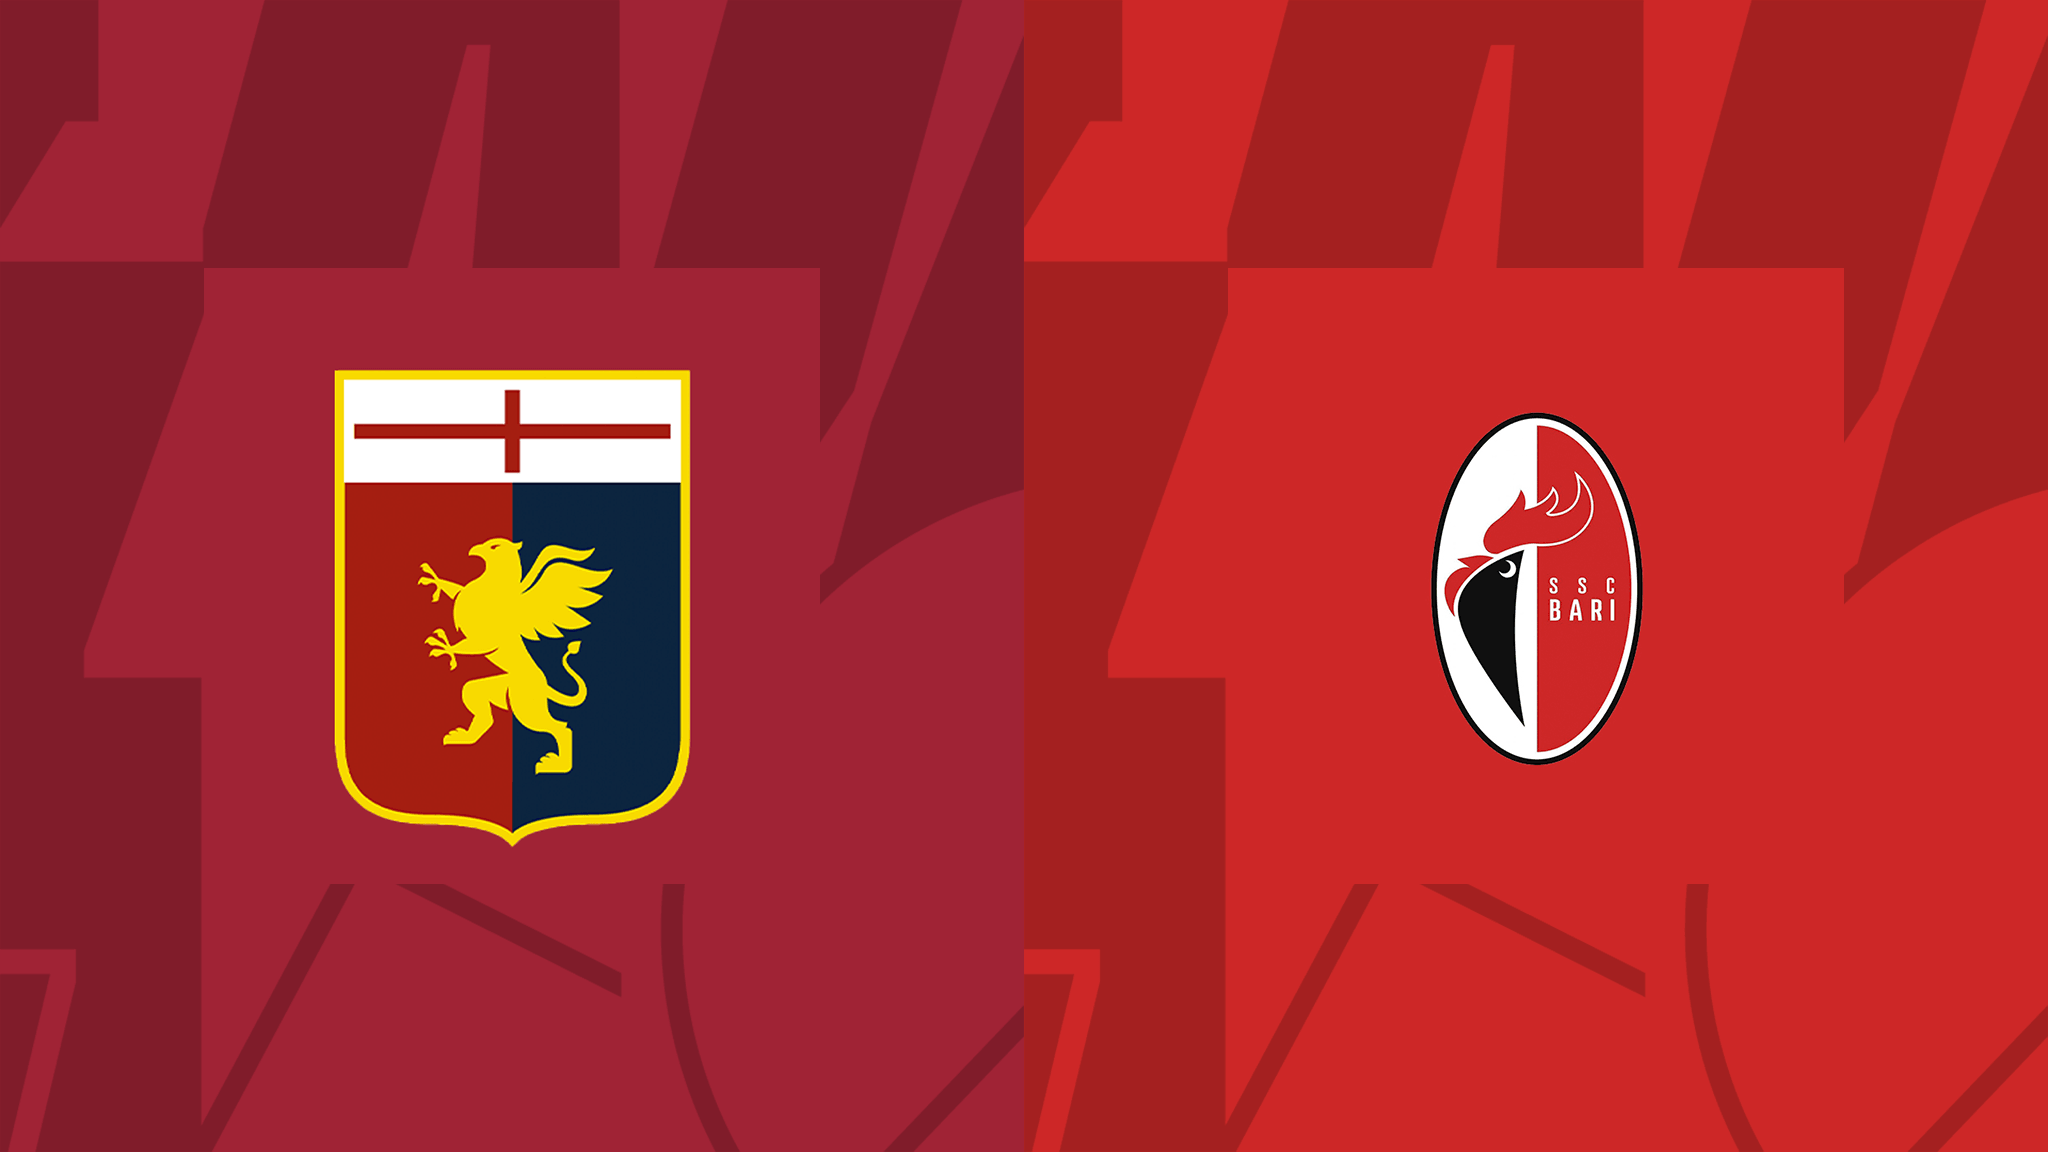 Genoa Bari 4-3 final direct match